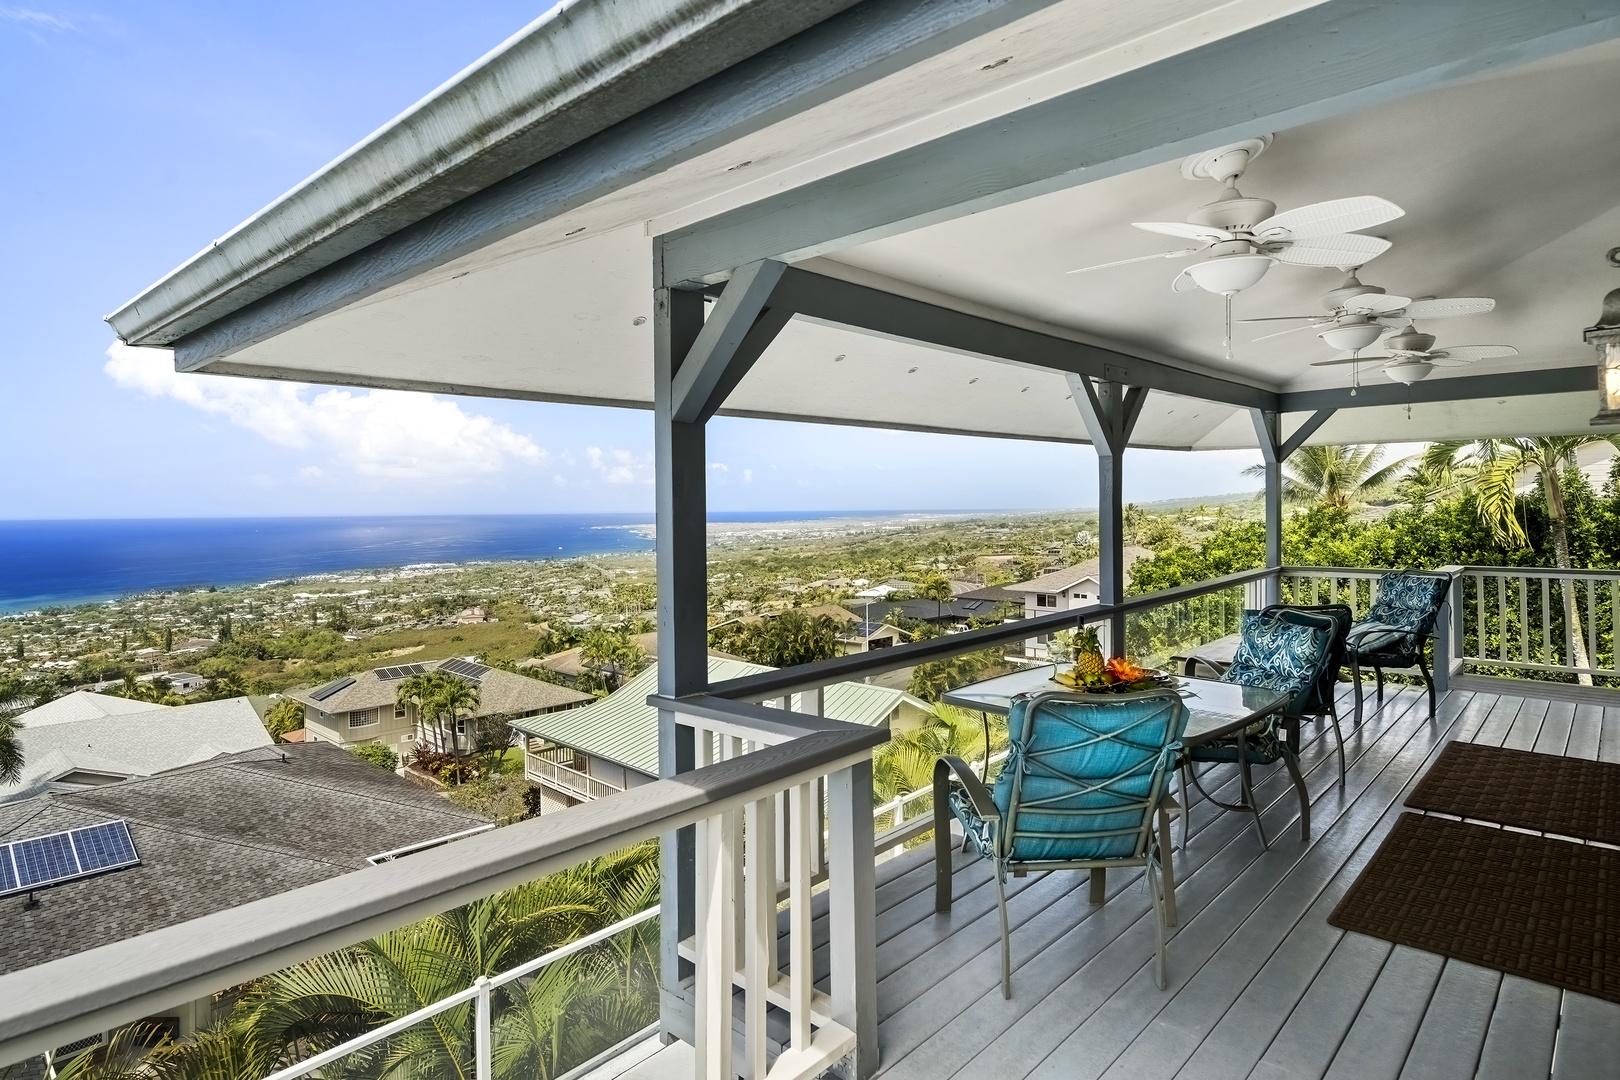 Kailua Kona Vacation Rentals, Honu O Kai (Turtle of the Sea) - Panoramic views from the generous upstairs Lanai